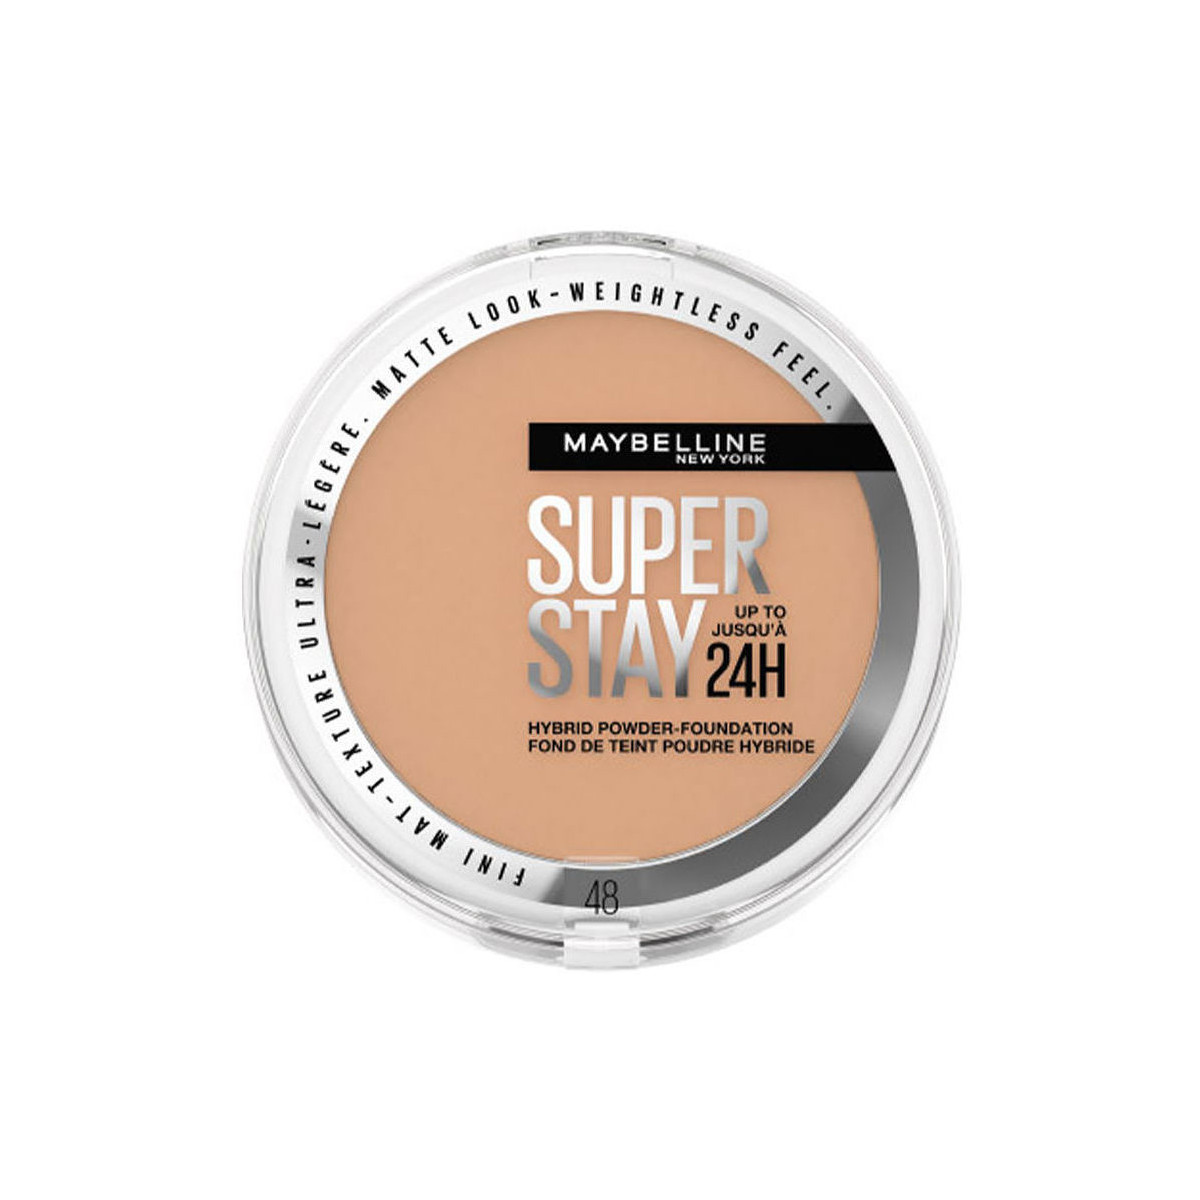 Beauty Blush & Puder Maybelline New York Superstay 24h Hybrid Puder-foundation 48 9 Gr 